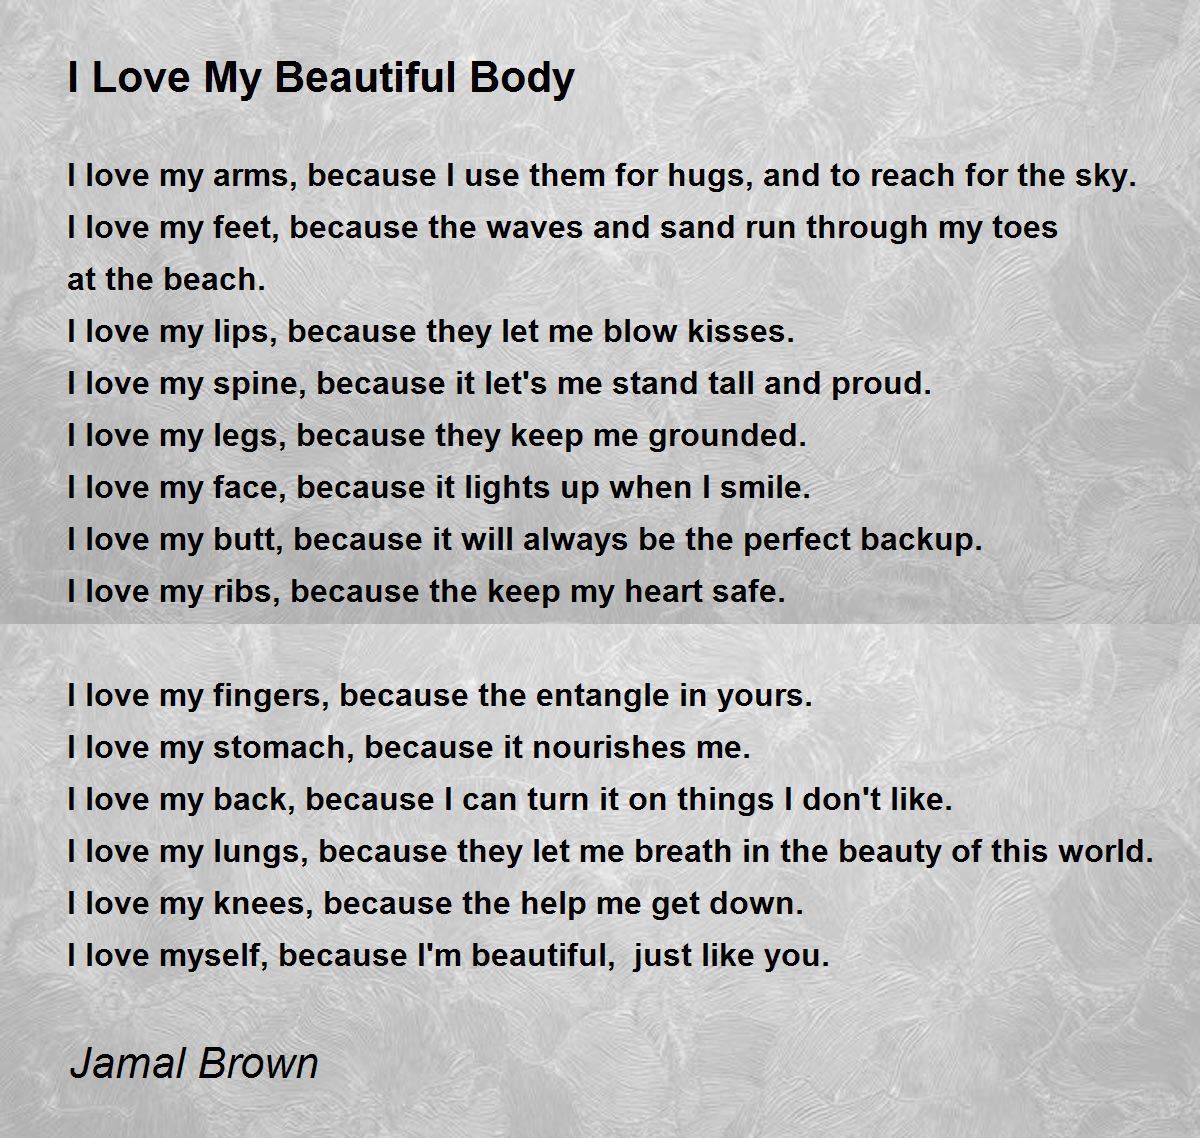 https://img.poemhunter.com/i/poem_images/261/i-love-my-beautiful-body.jpg